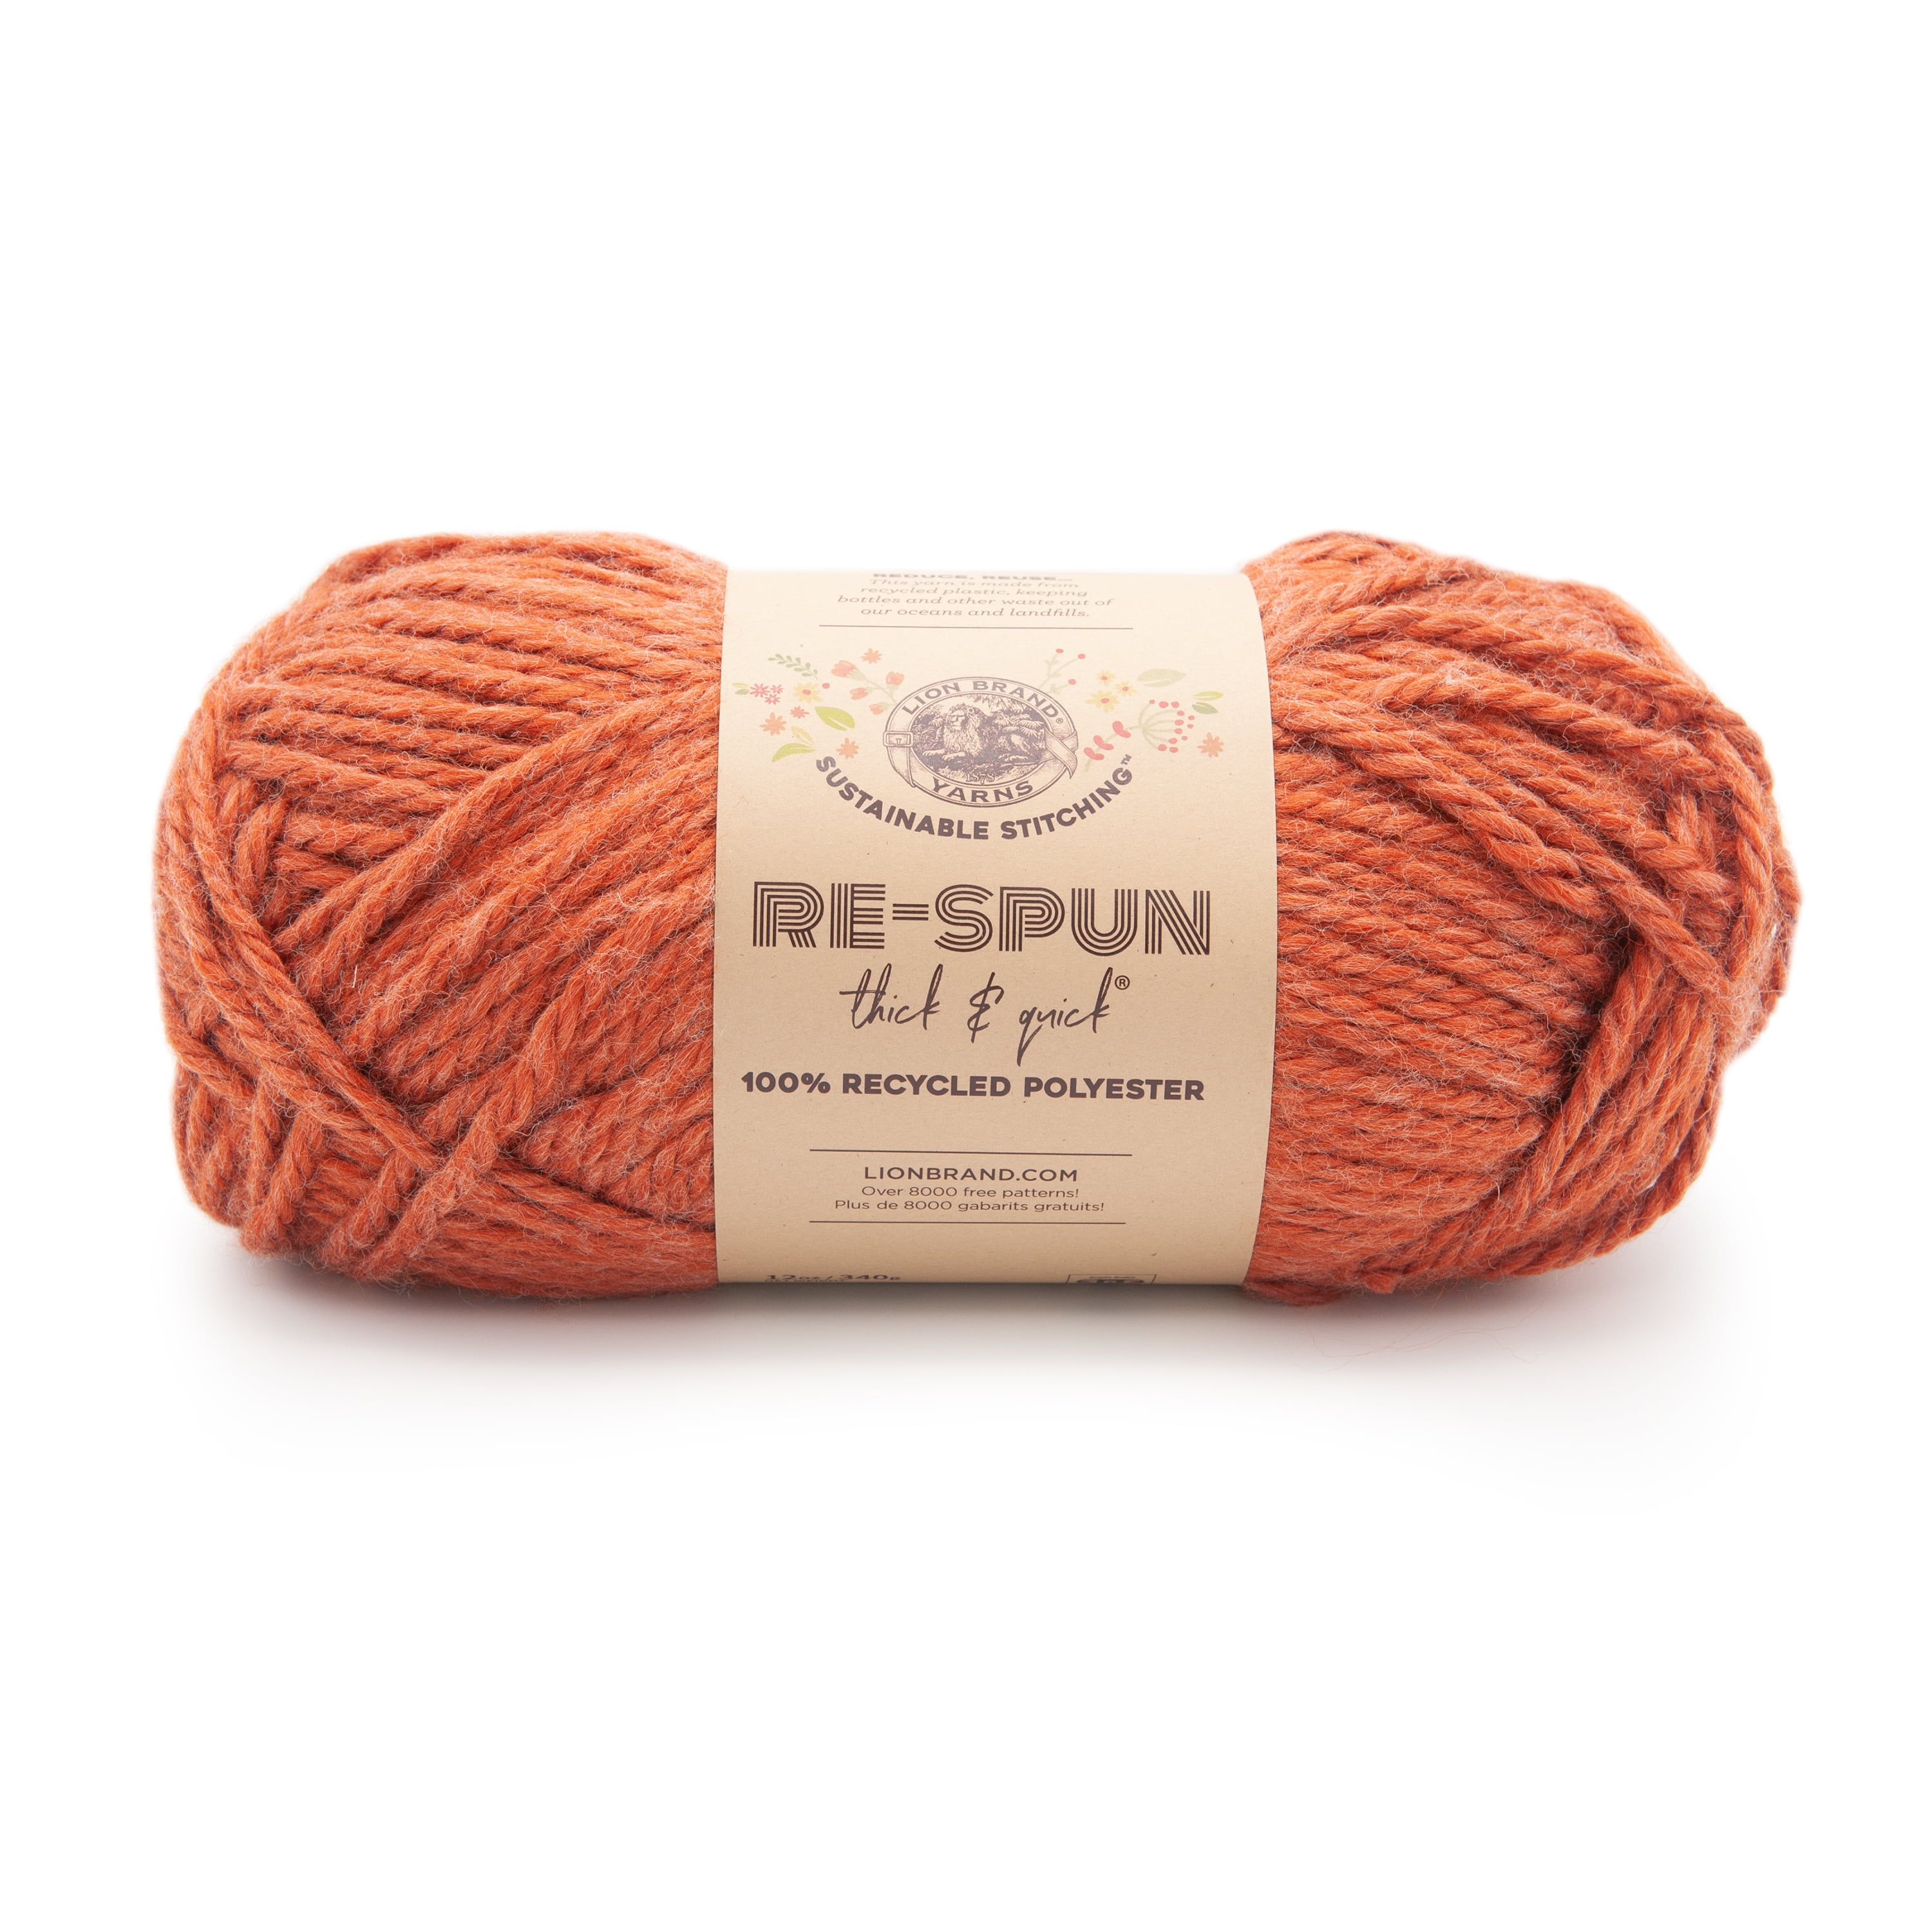 Lion Brand Yarn Re-Spun Thick & Quick Evergreen Super Bulky